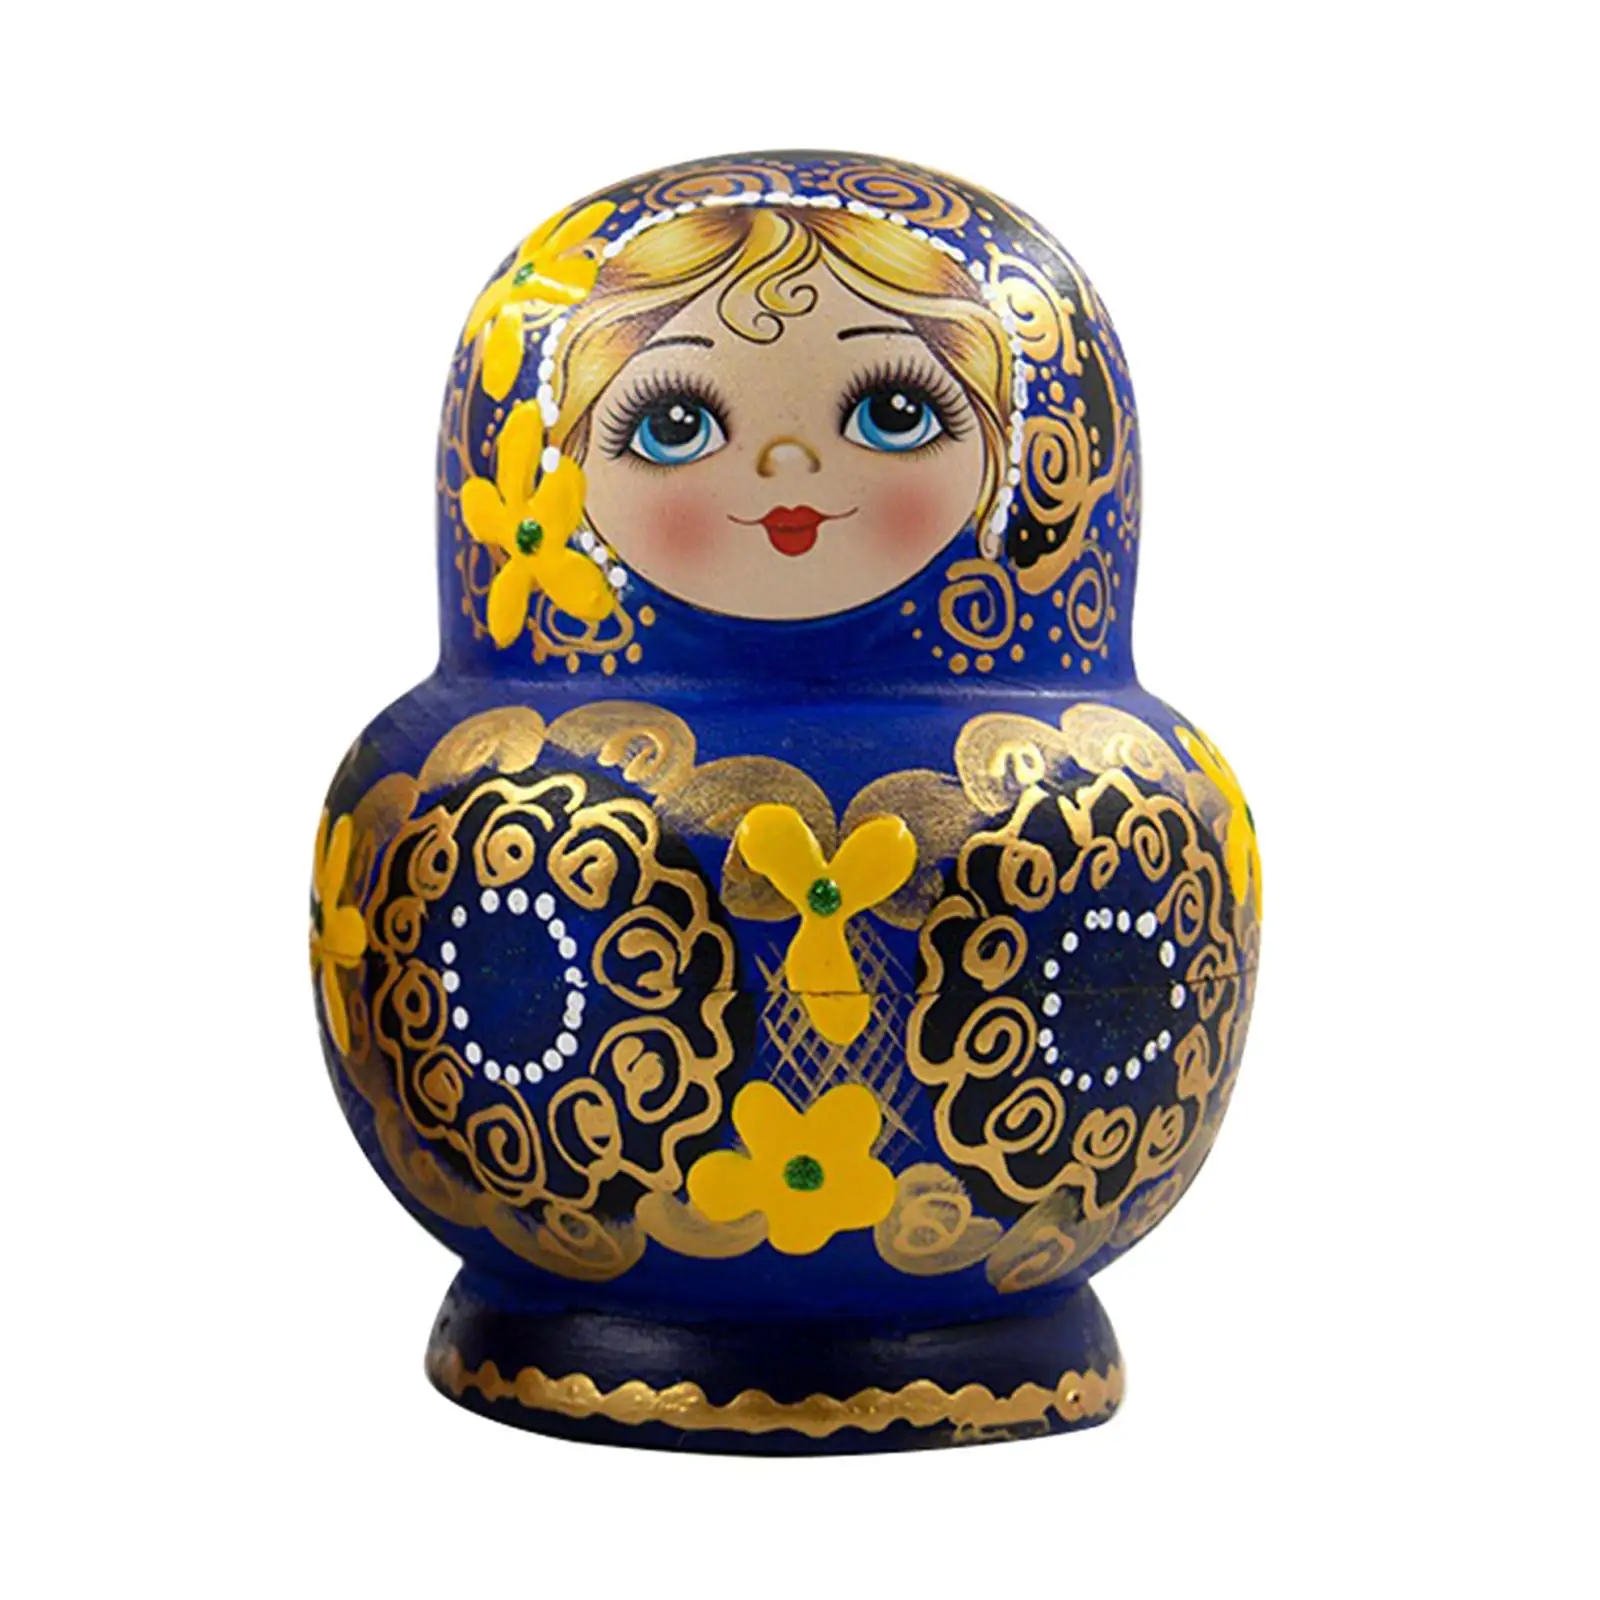 10 Pieces Creative Russian Nesting Dolls Matryoshka Dolls for Room Decor